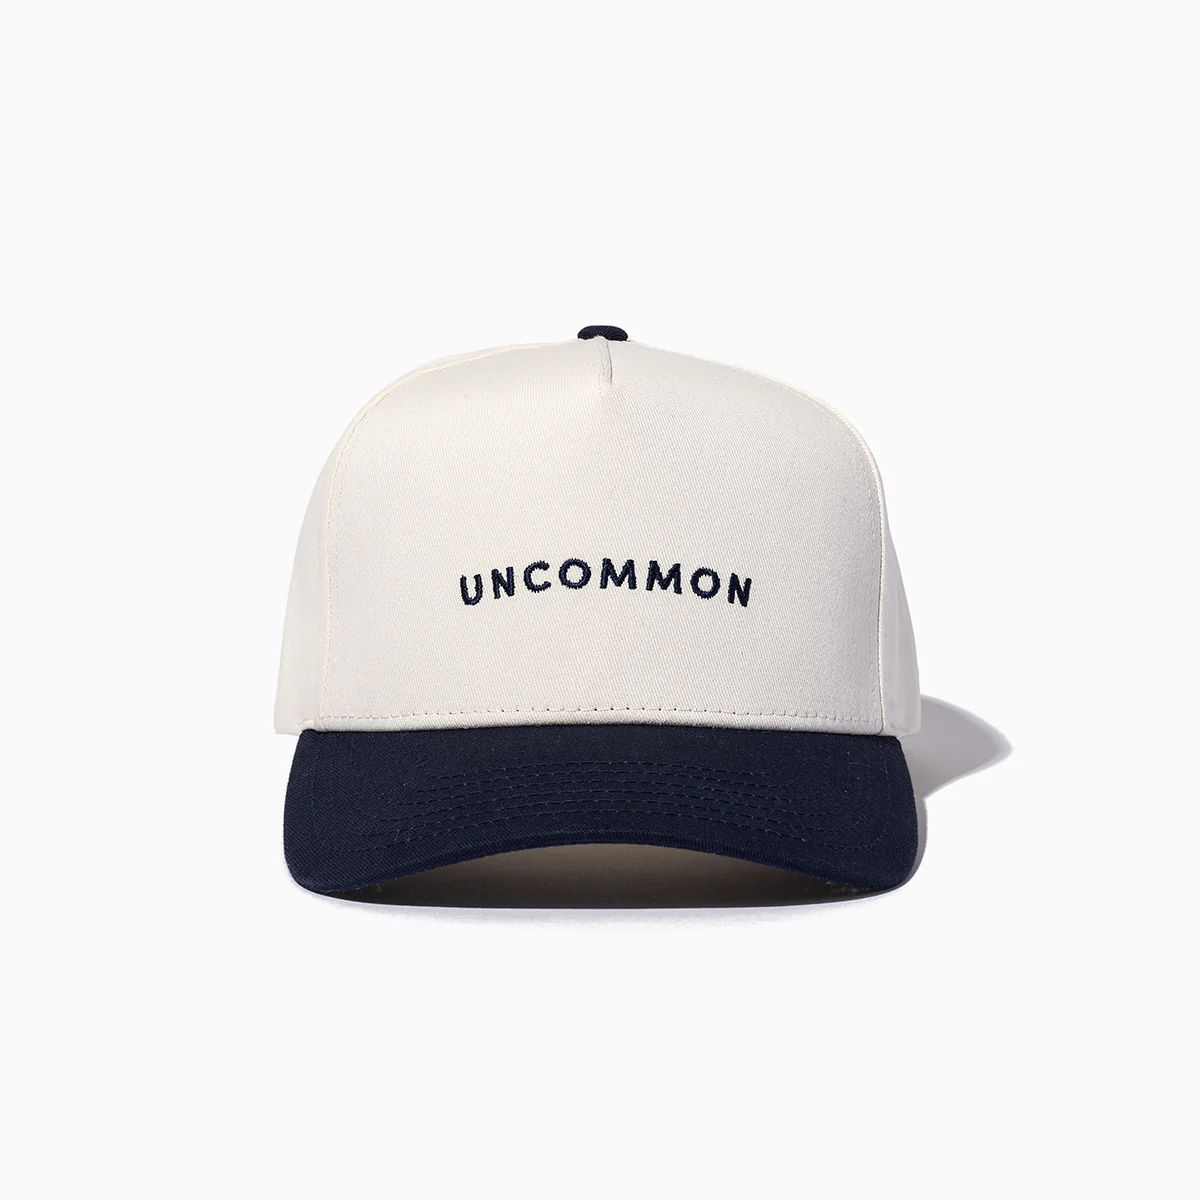 Simple Uncommon Two-Tone Snapback Trucker Hat | Uncommon Lifestyle | Uncommon James